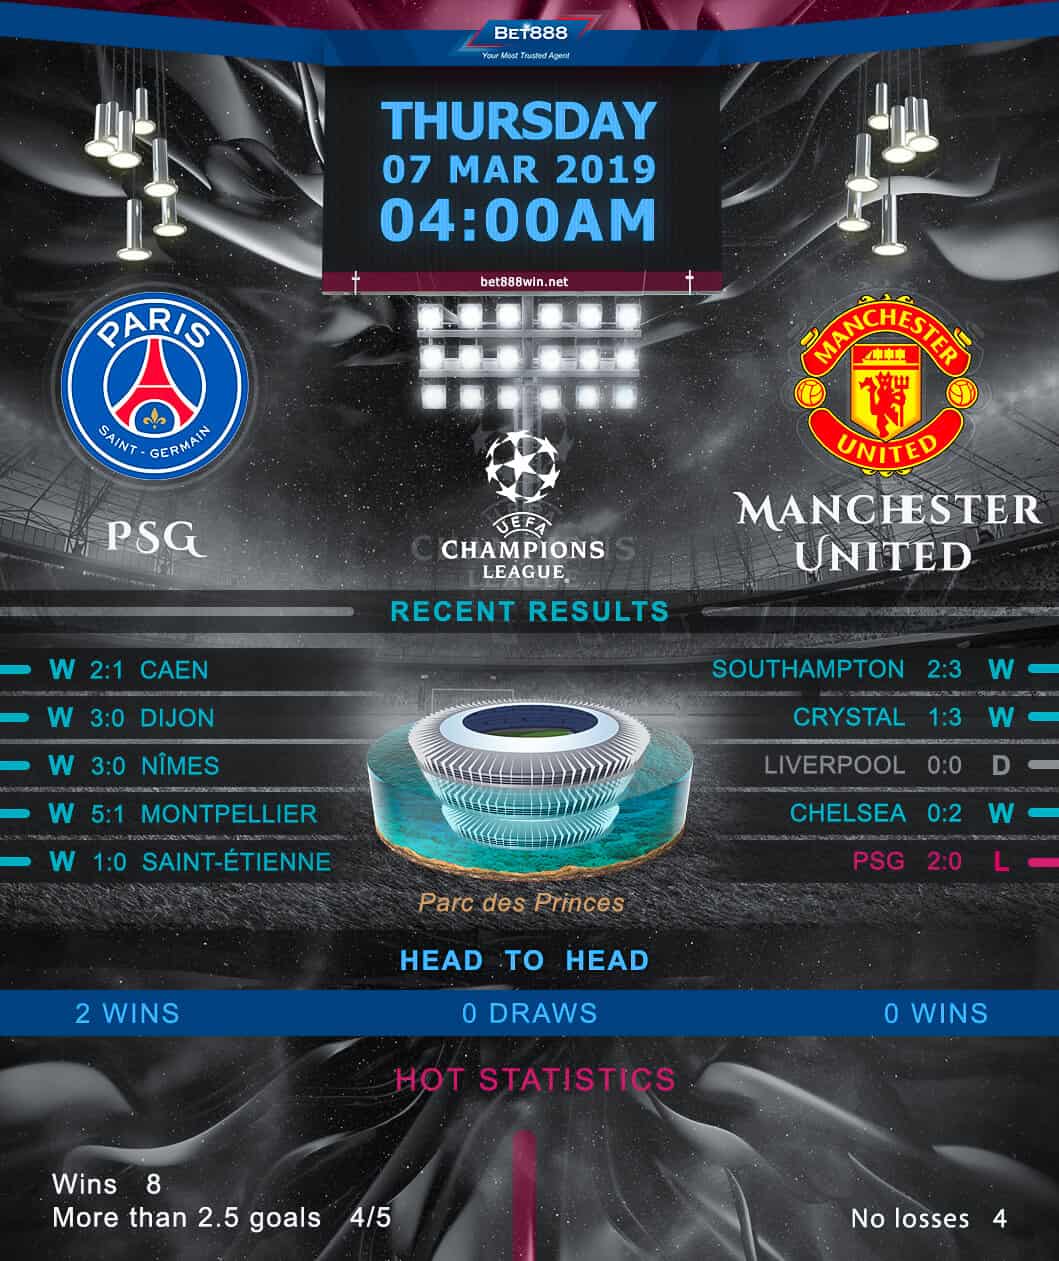 Paris Saint-Germain vs Manchester United 07/03/19